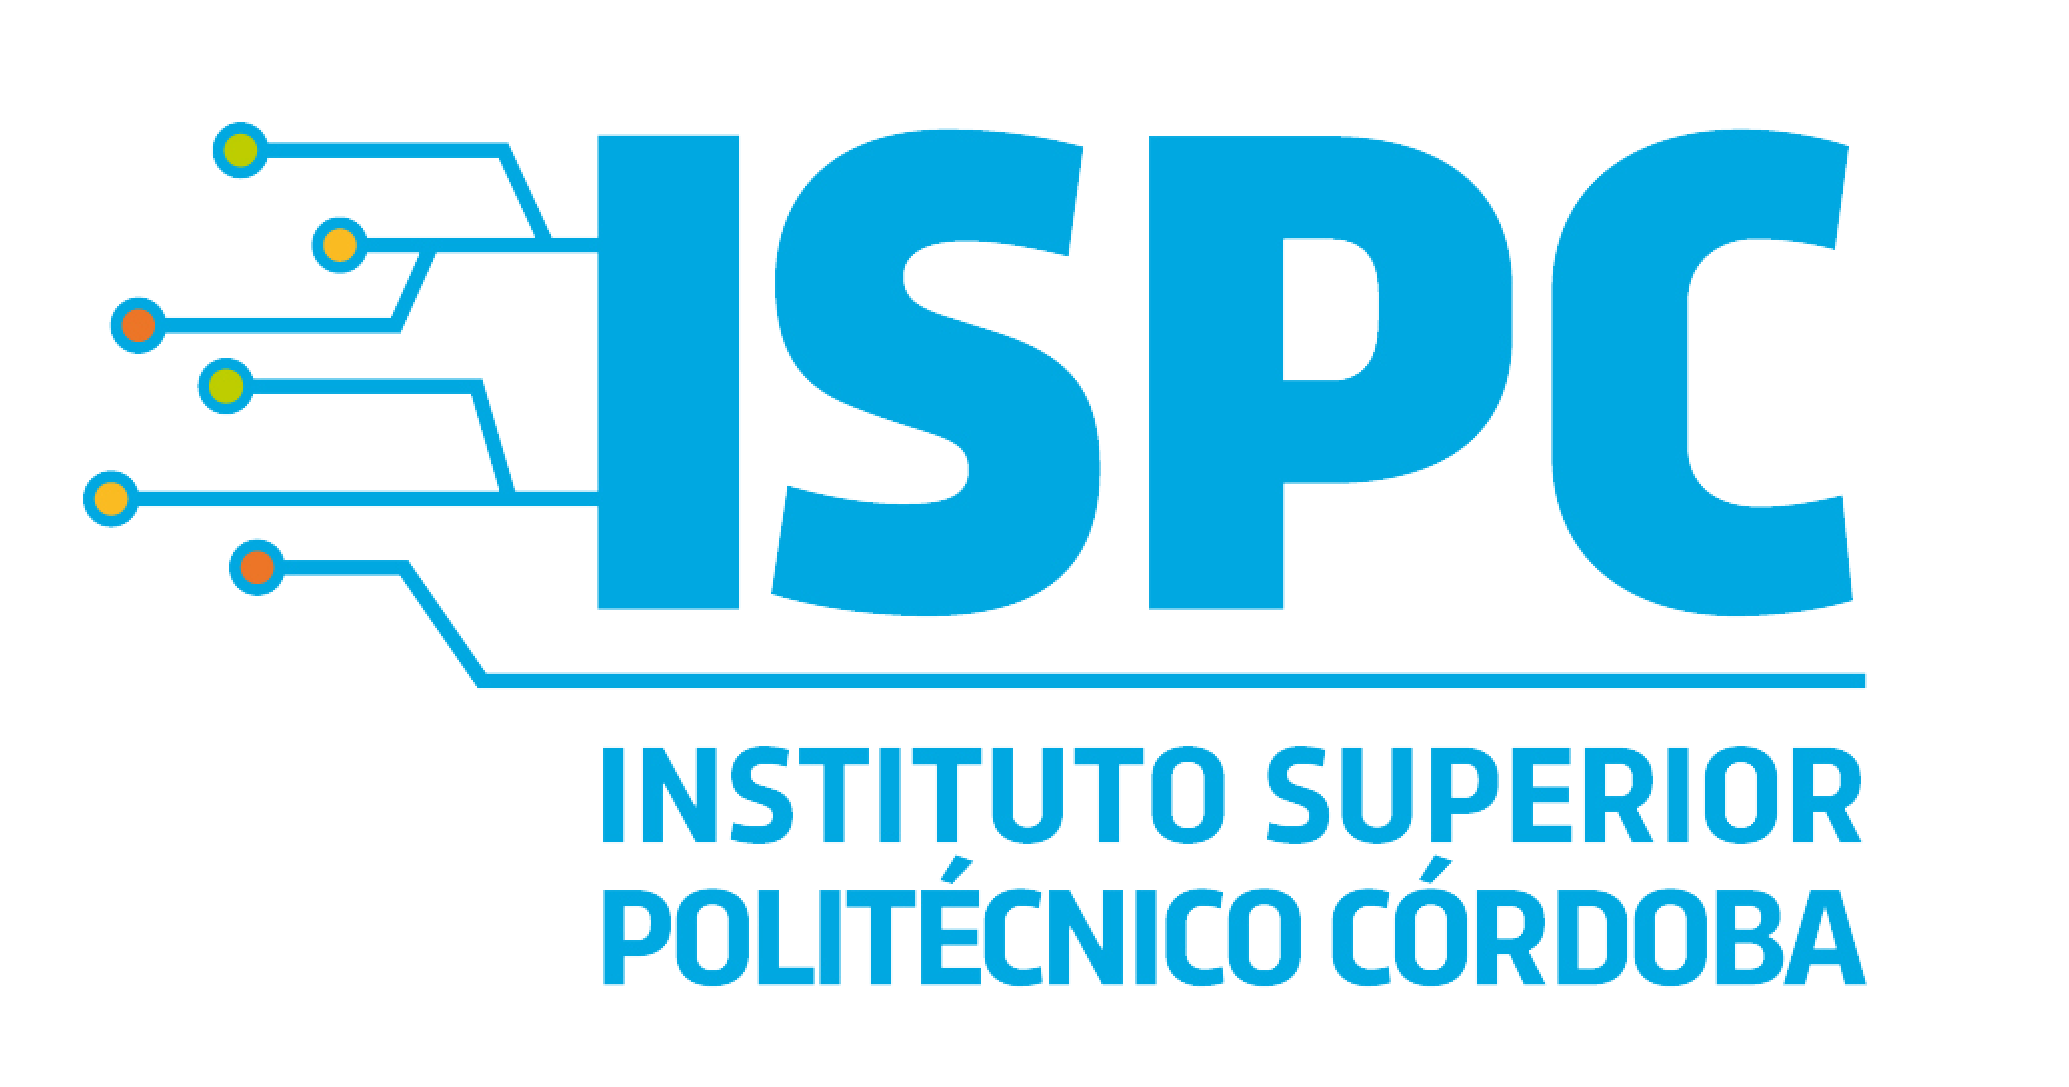 Instituto Superior Politécnico Córdoba